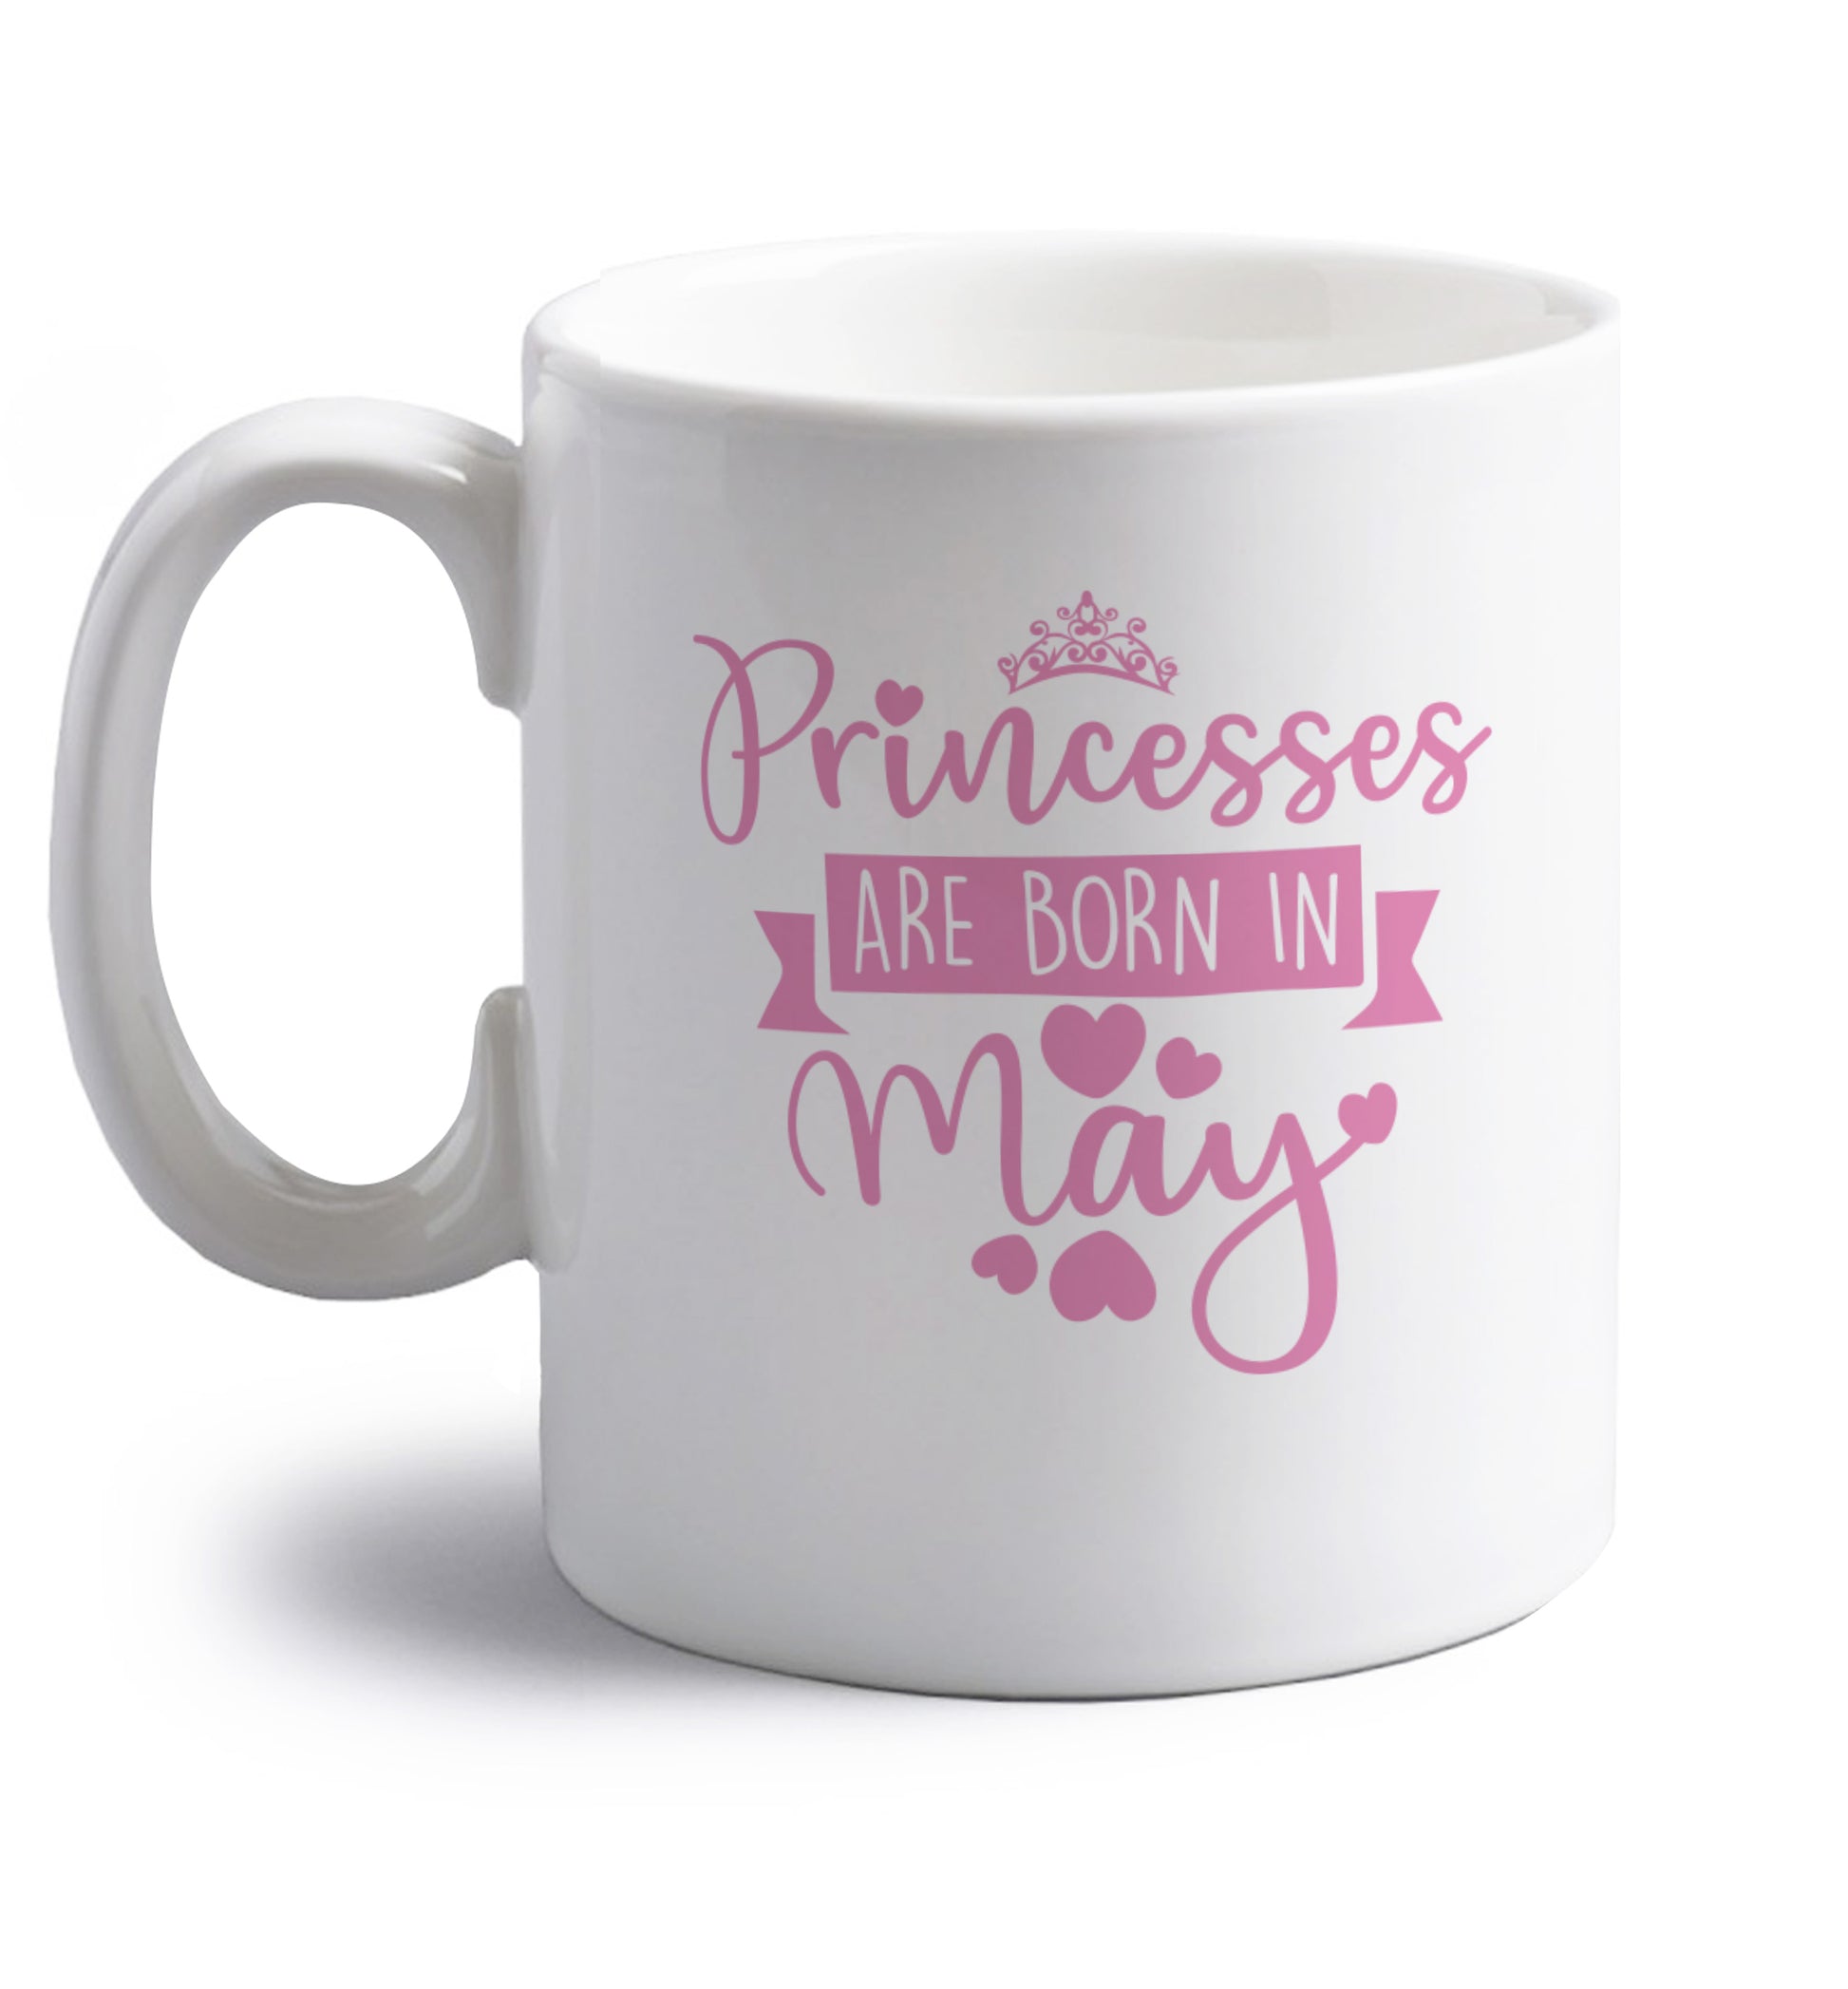 Princesses are born in May right handed white ceramic mug 